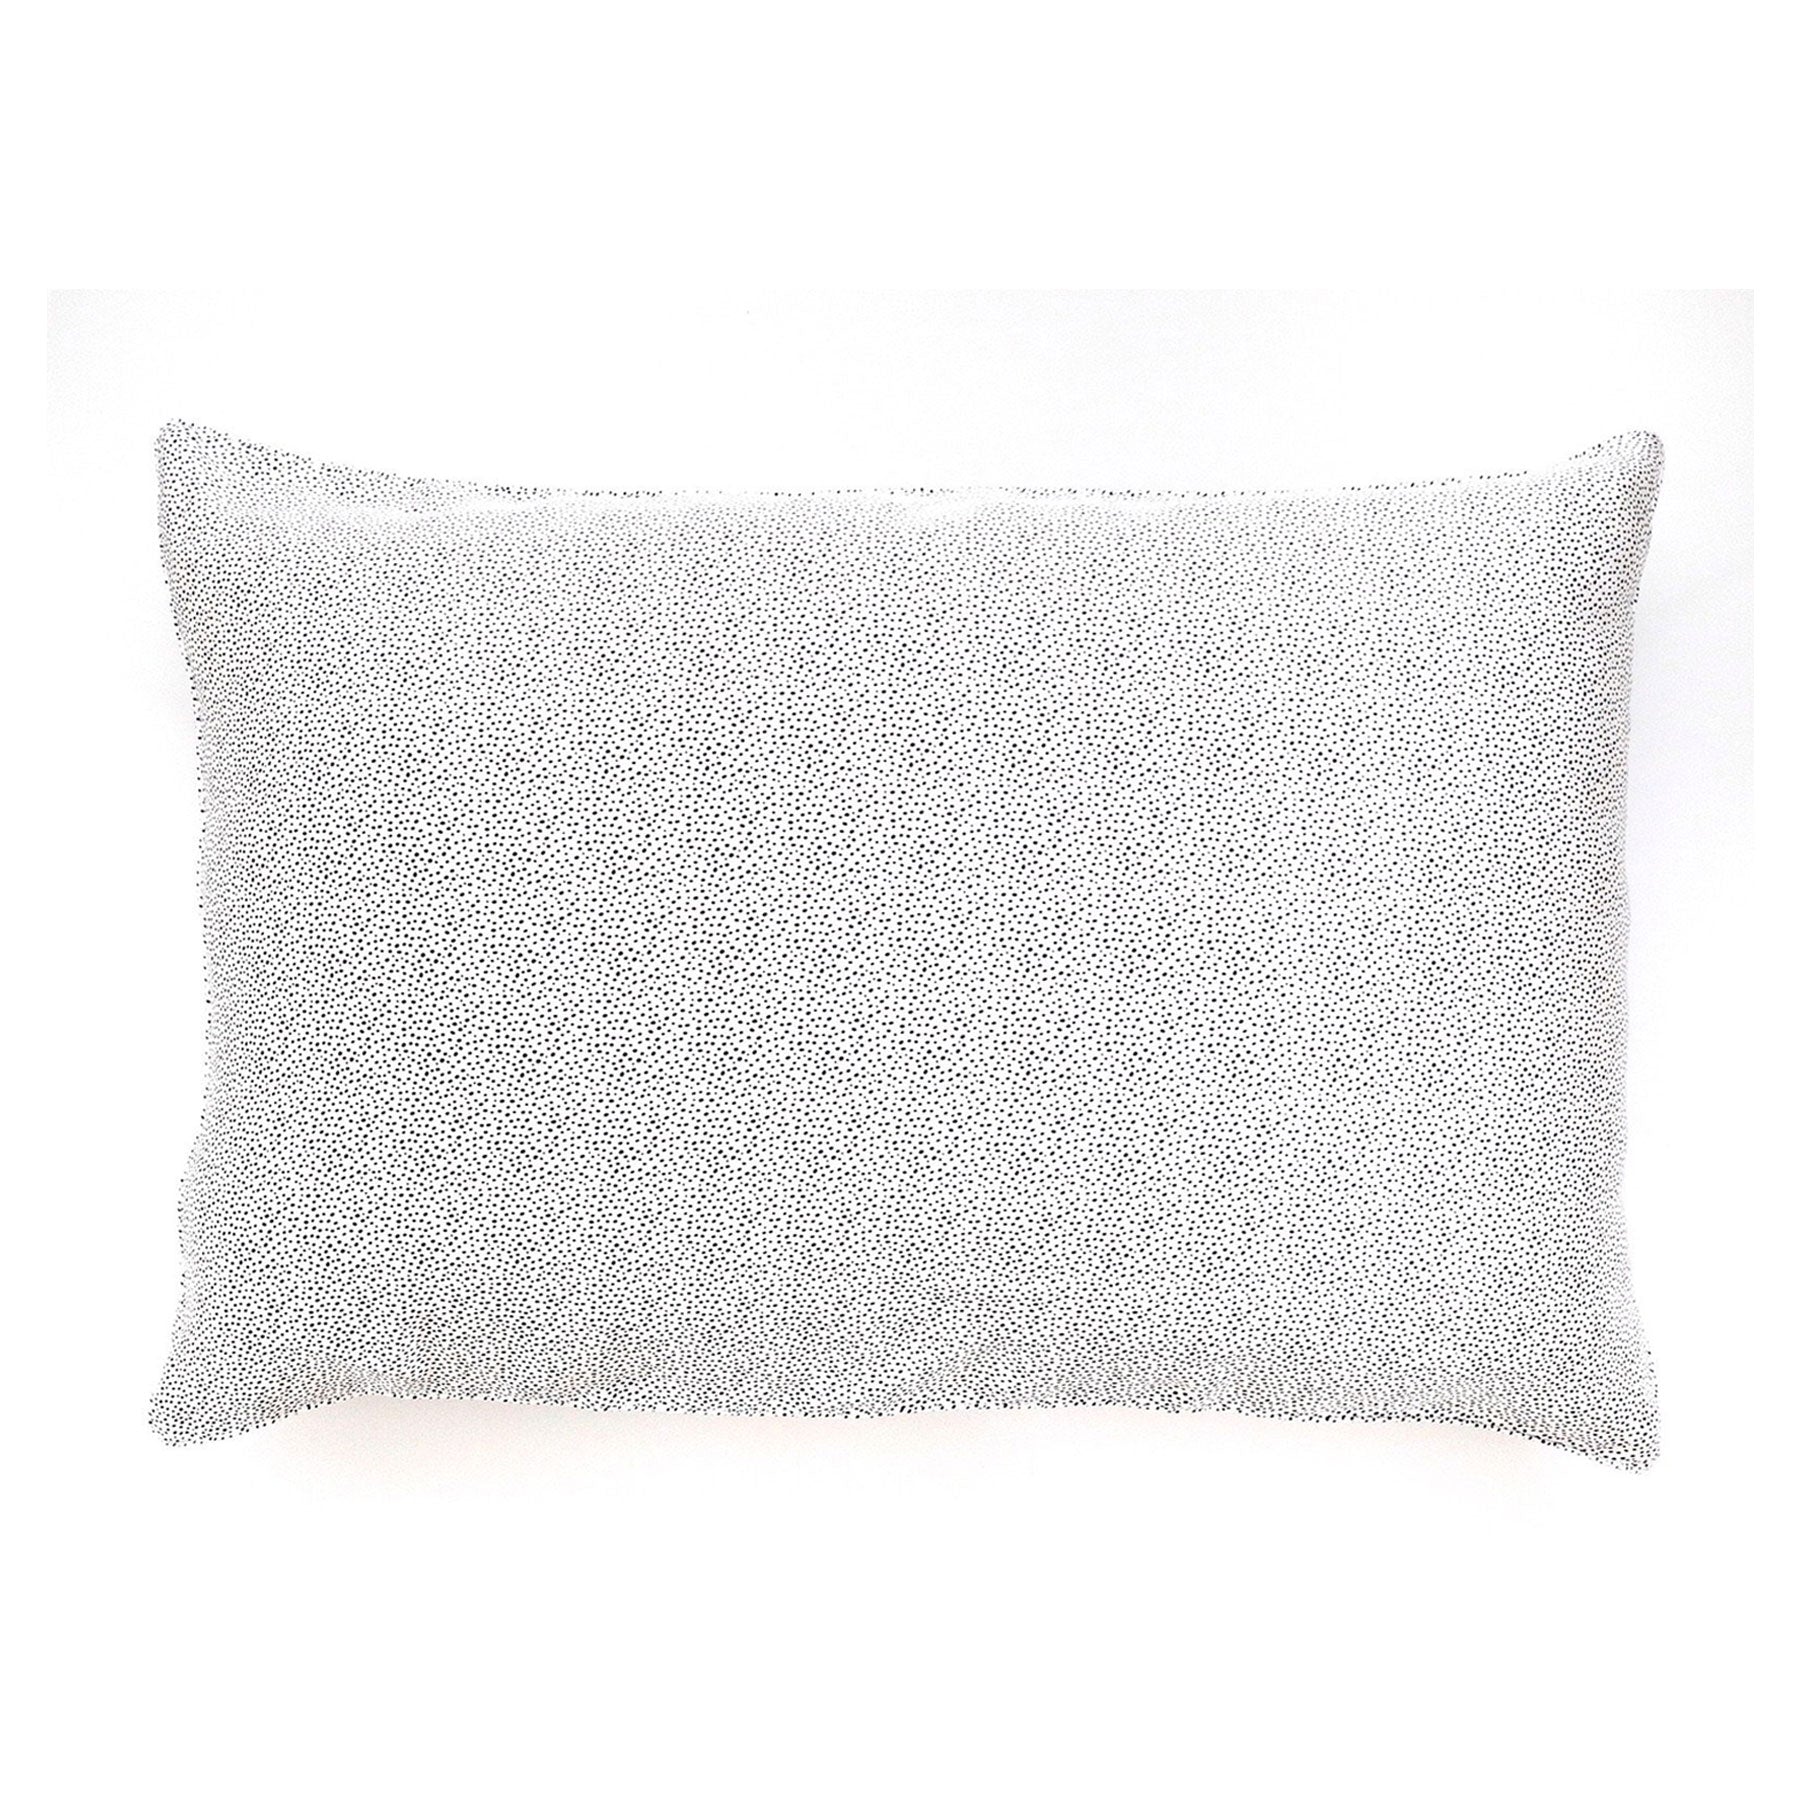 Silk Pillowcase Spotty Dots